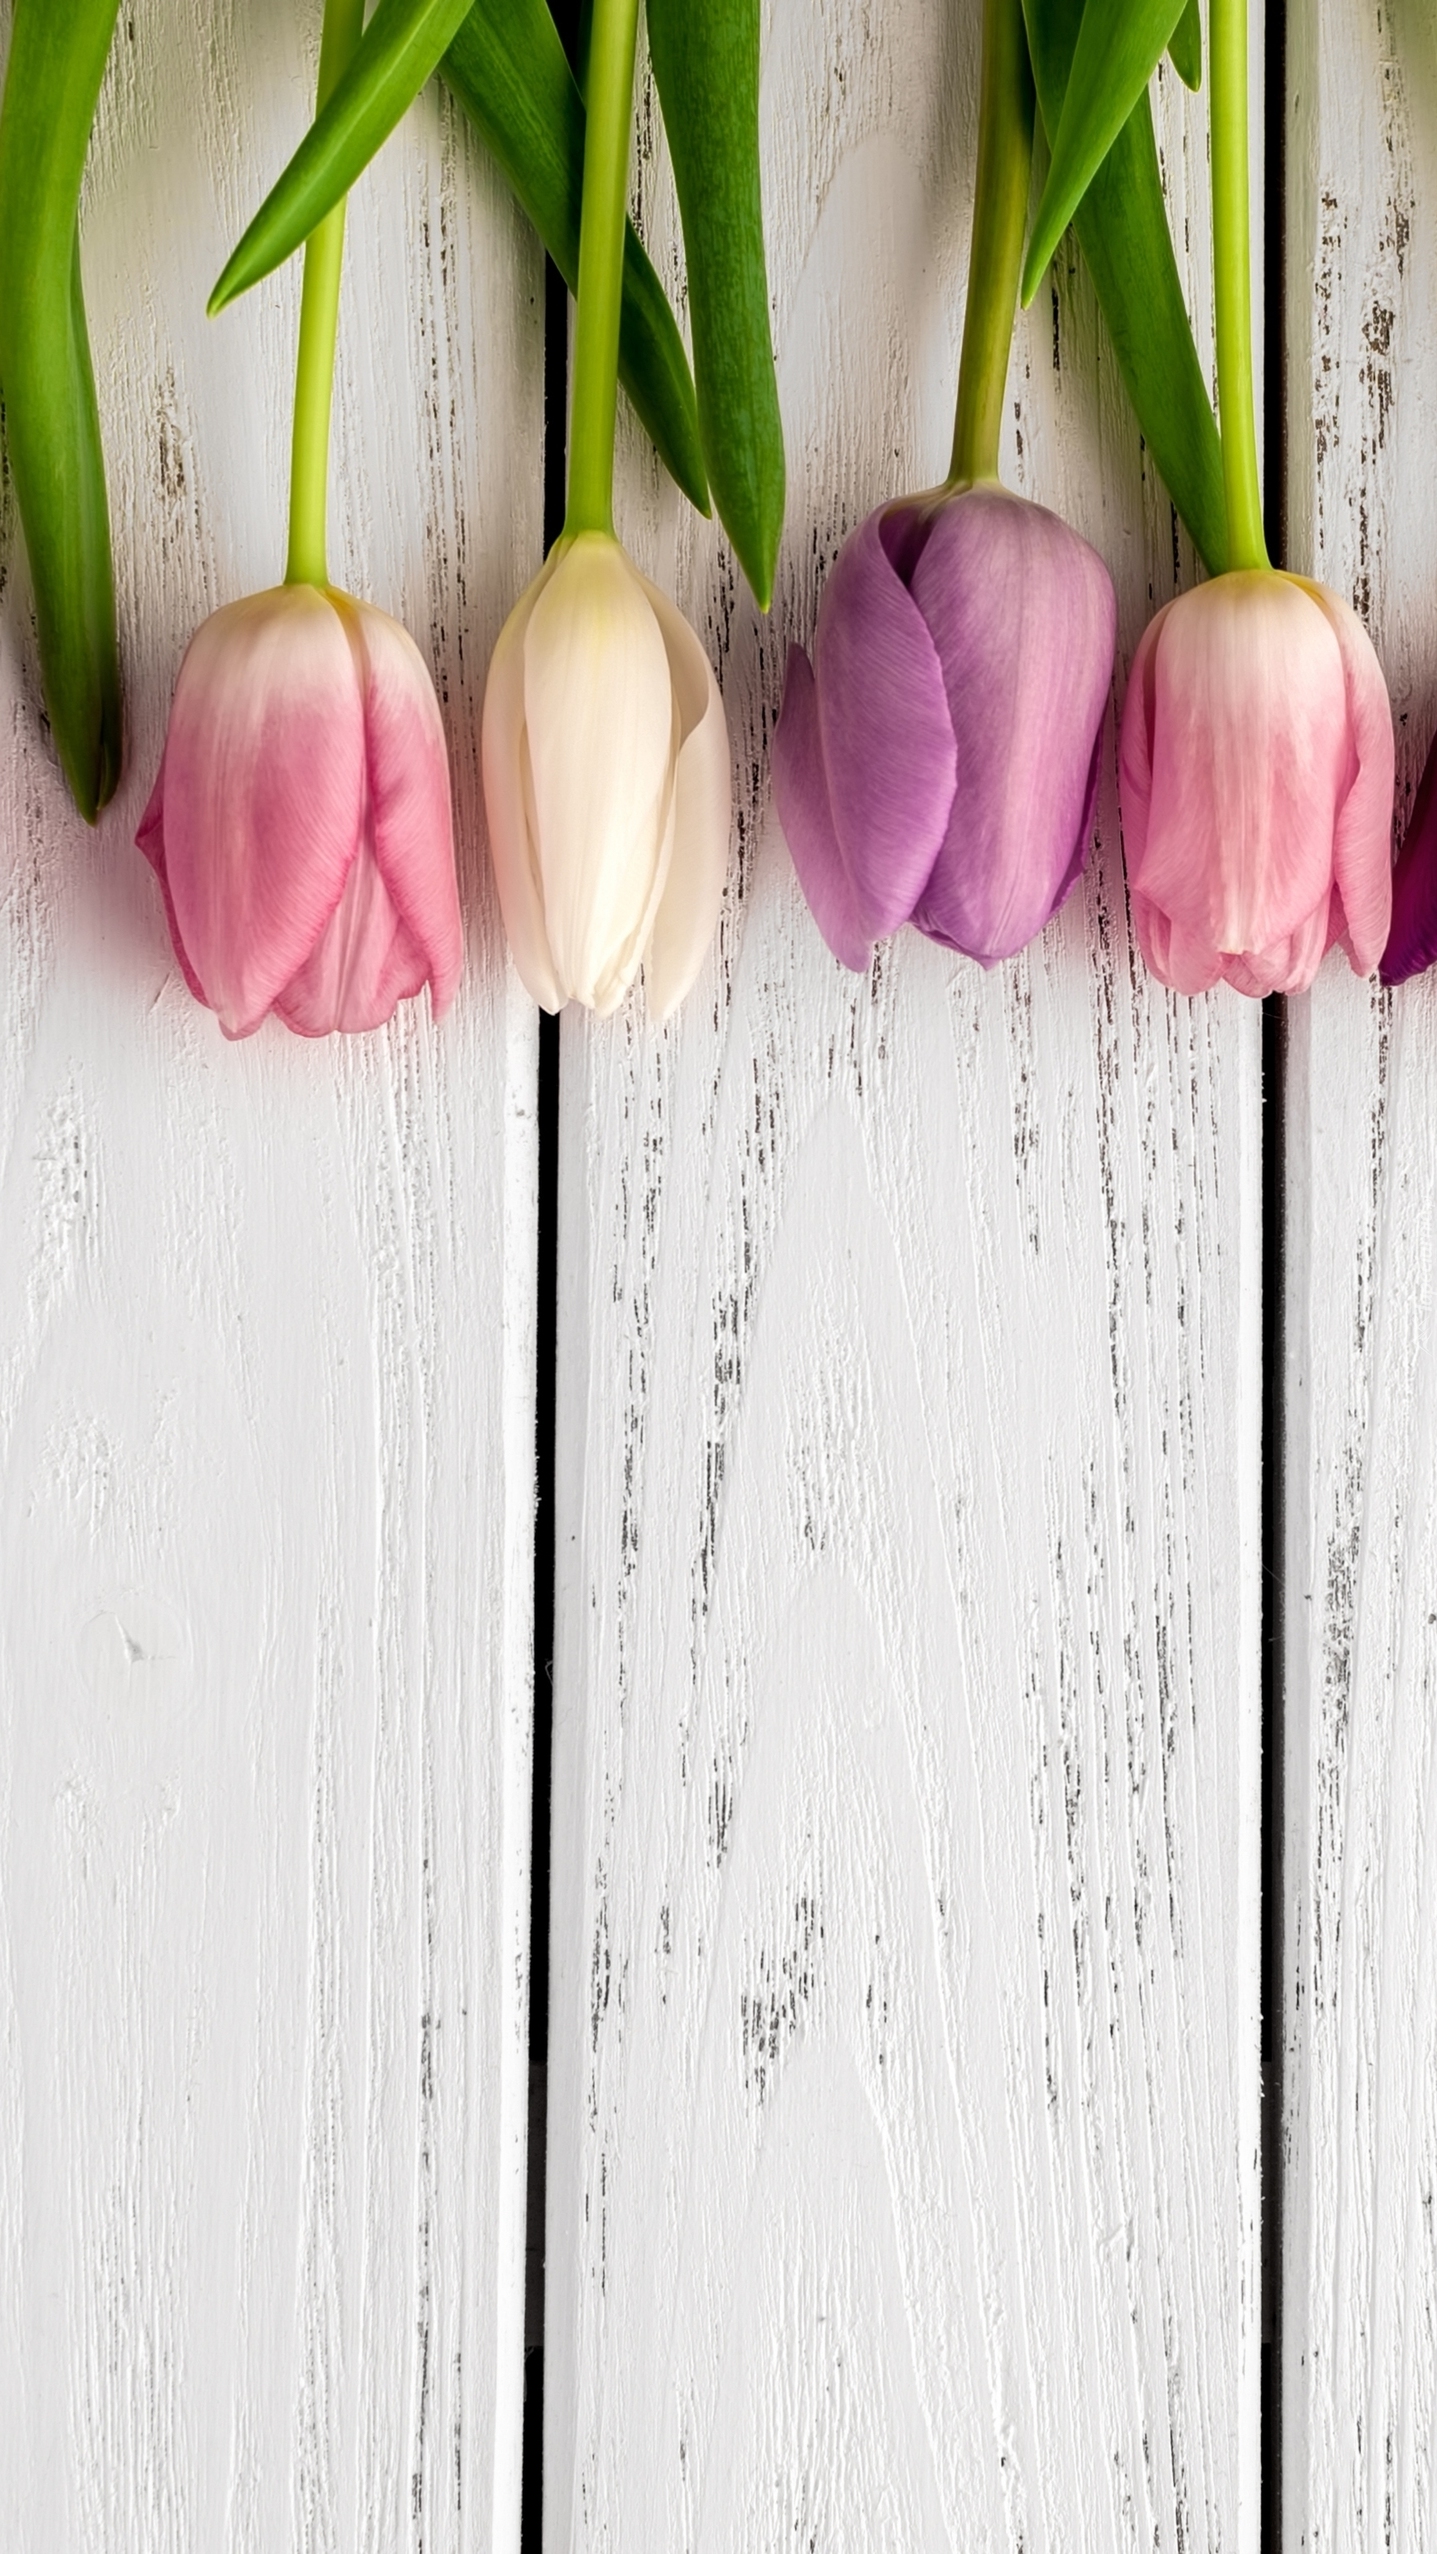 Tulipany na deskach